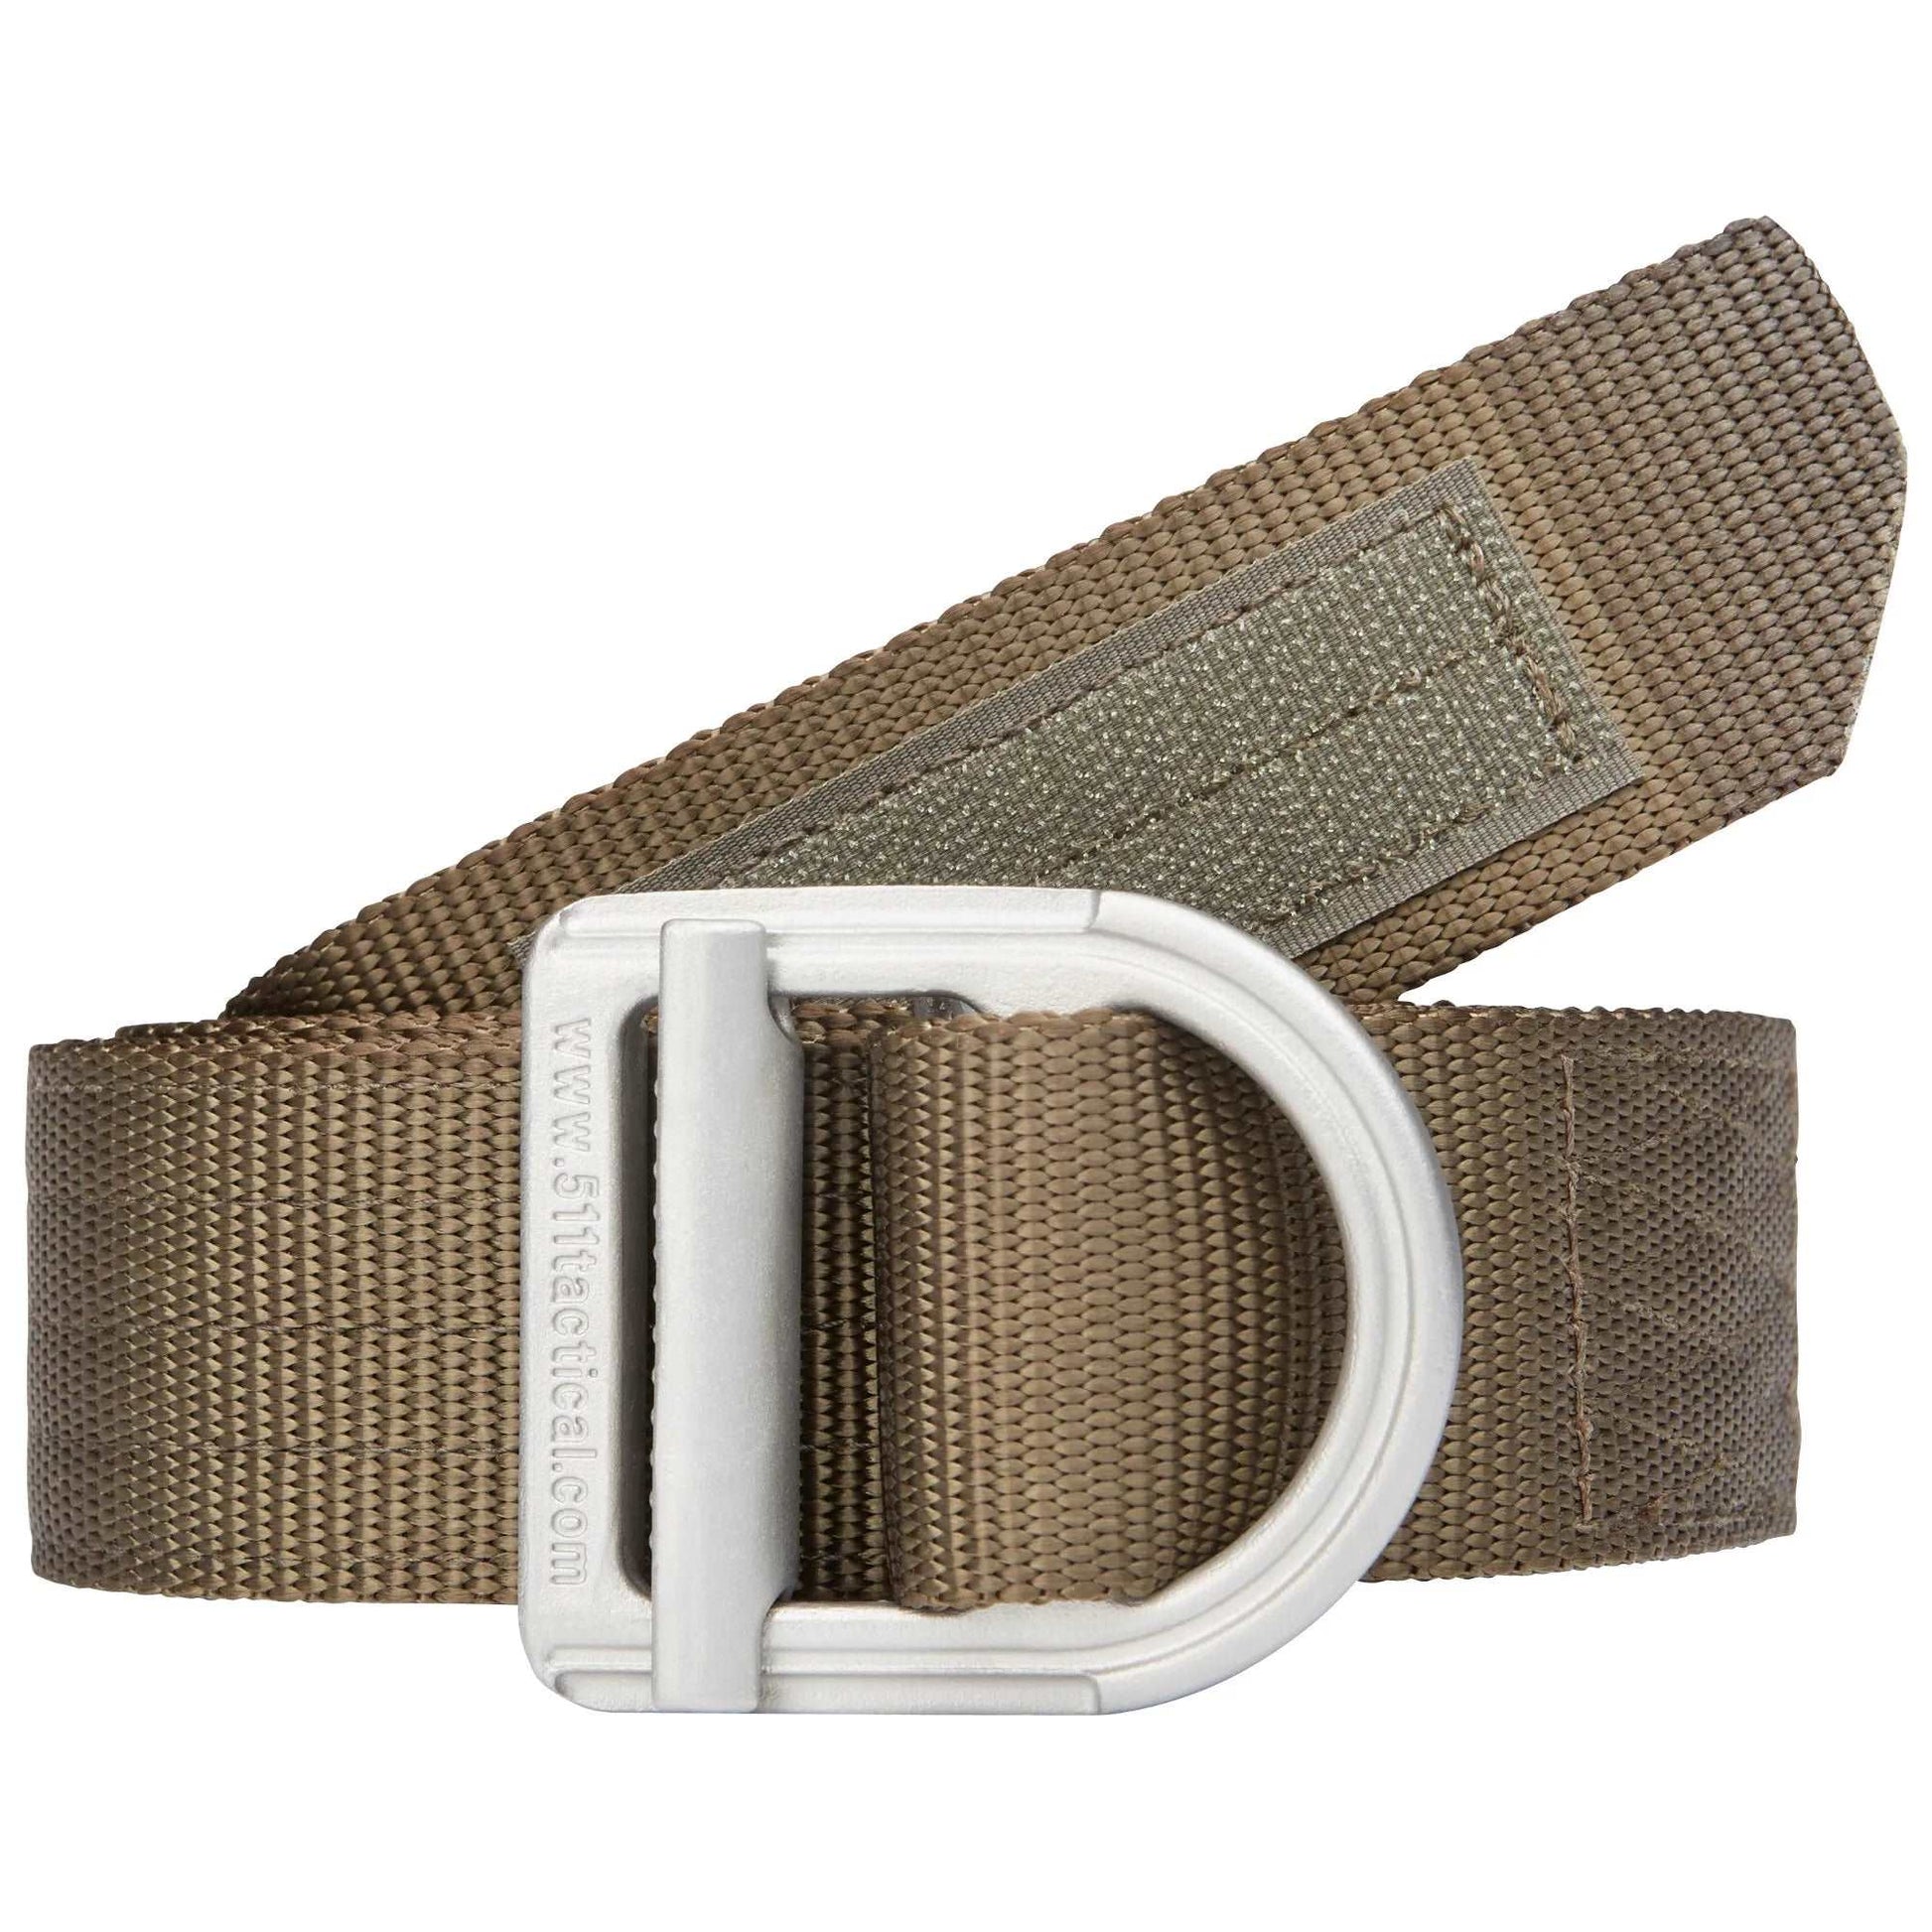 Belts - 5.11 Tactical 1.5" Trainer Belt